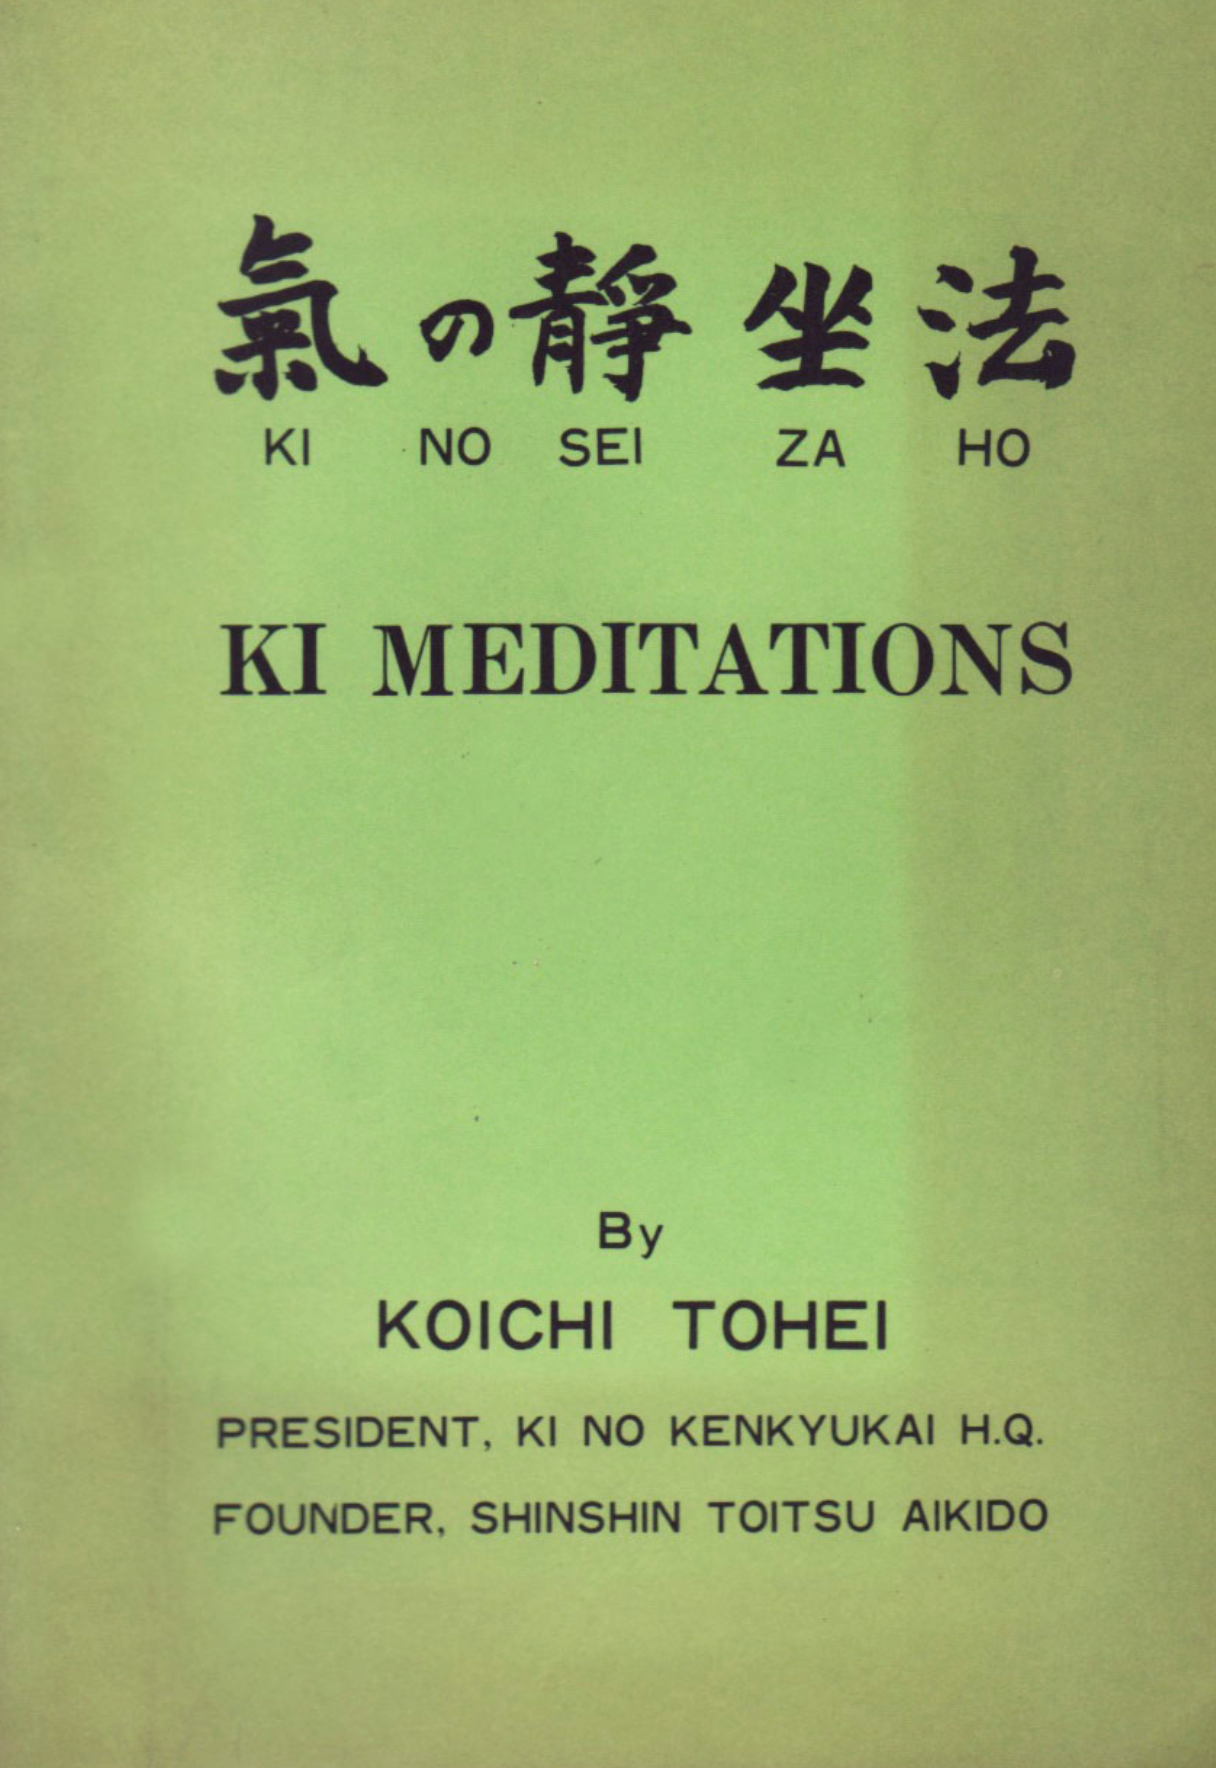 Ki Meditations Book by Koichi Tohei (Preowned) - Budovideos Inc